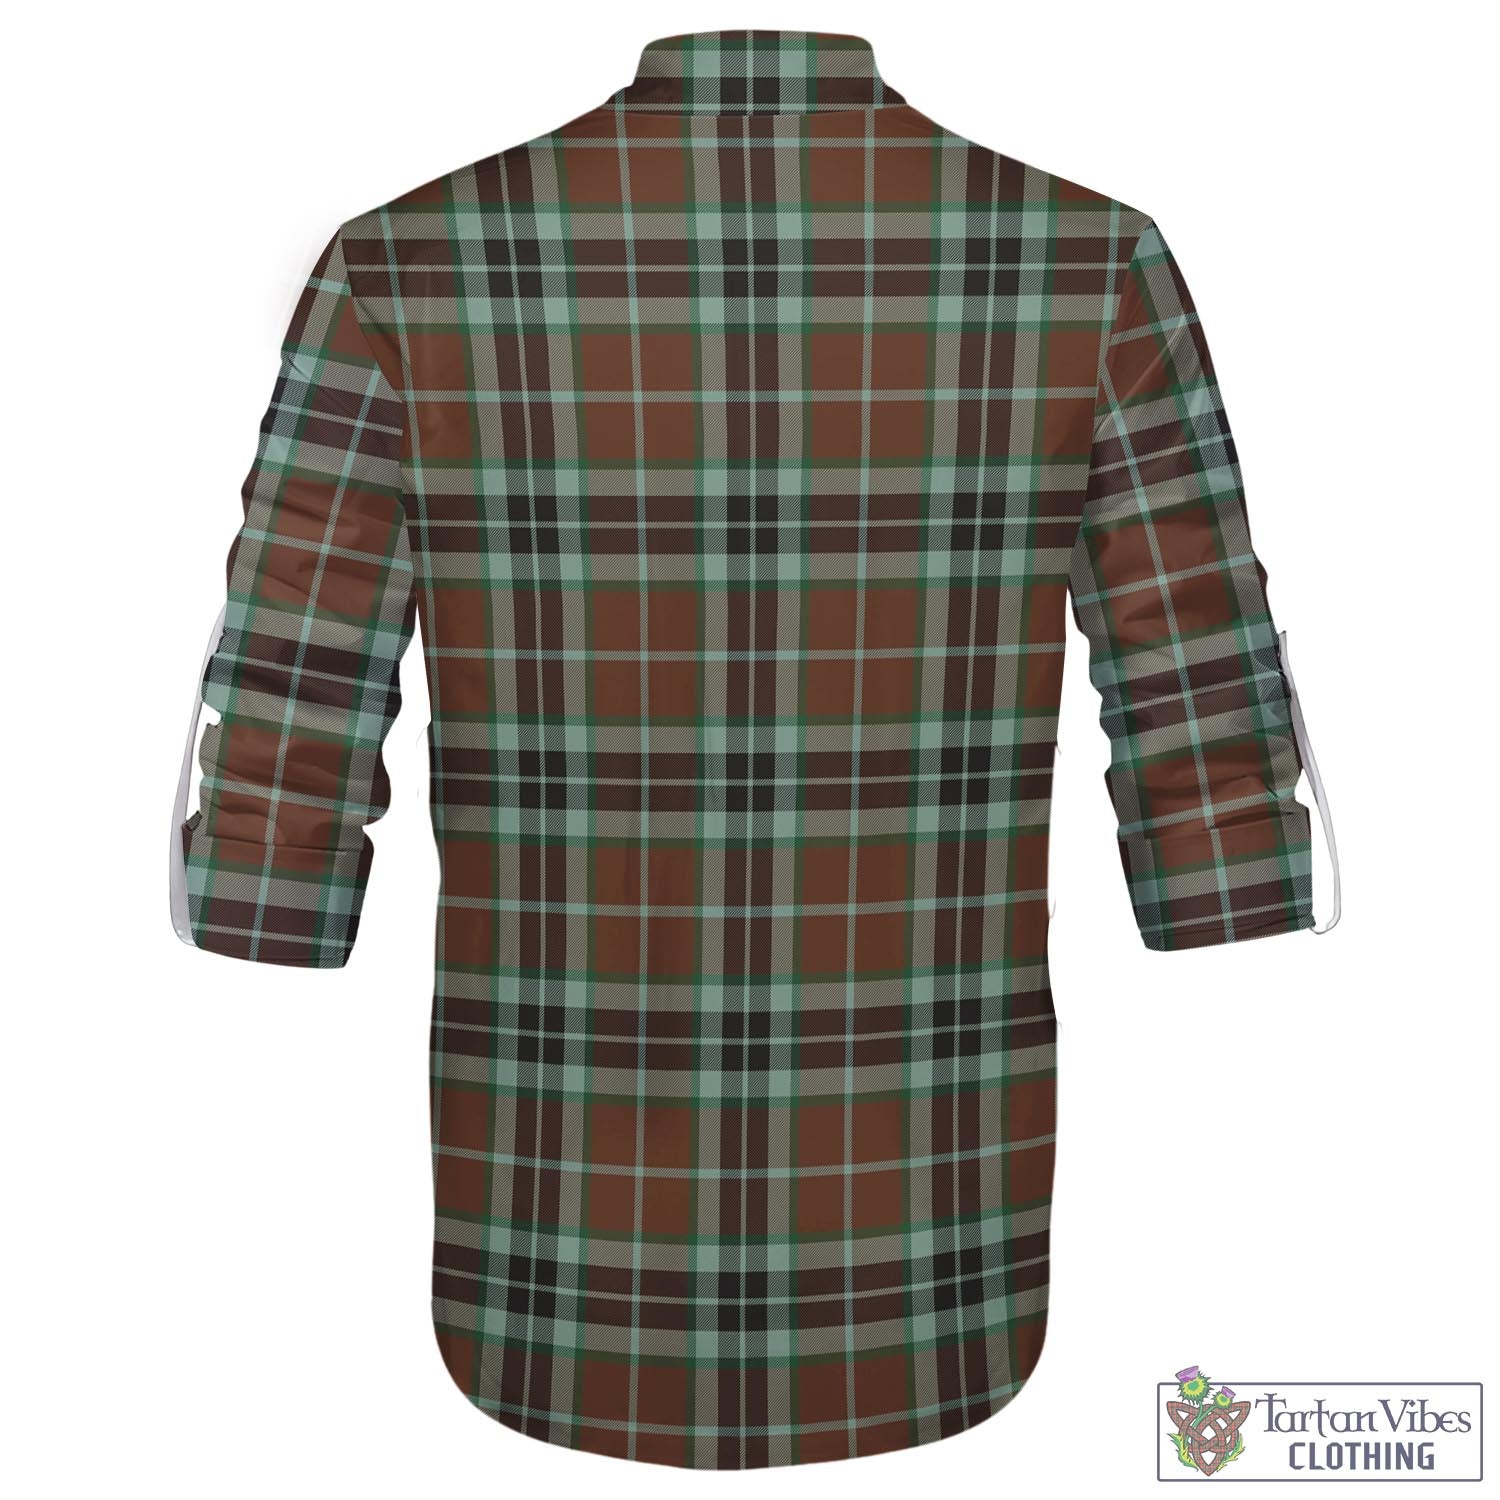 Tartan Vibes Clothing Thomson Hunting Modern Tartan Men's Scottish Traditional Jacobite Ghillie Kilt Shirt with Family Crest